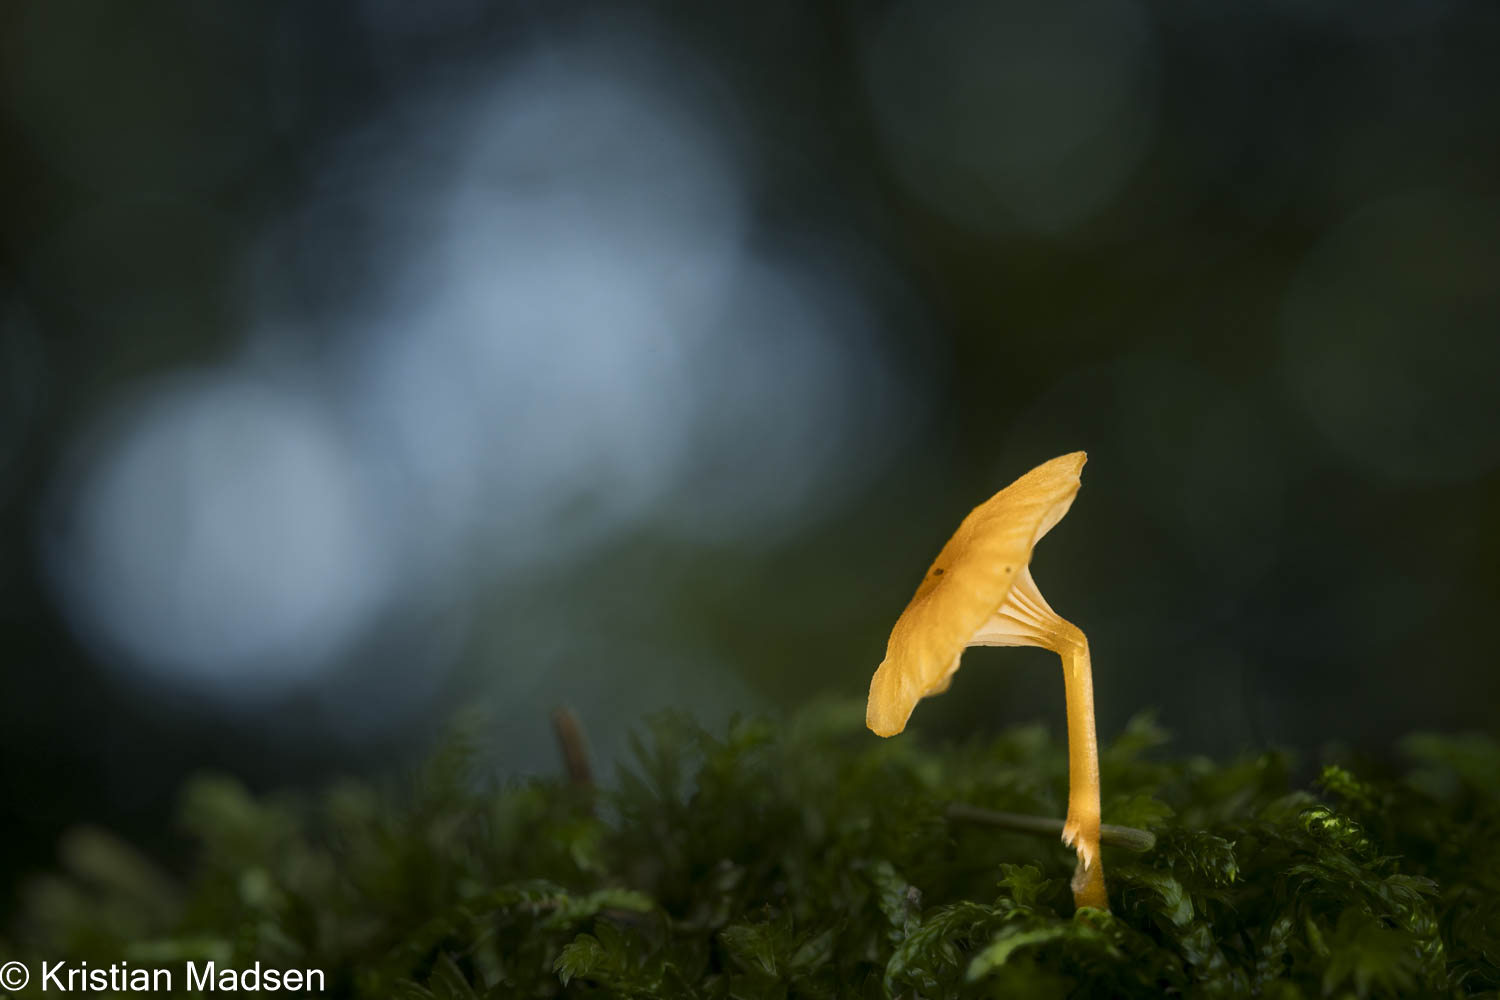 Spotlight on this tiny mushroom